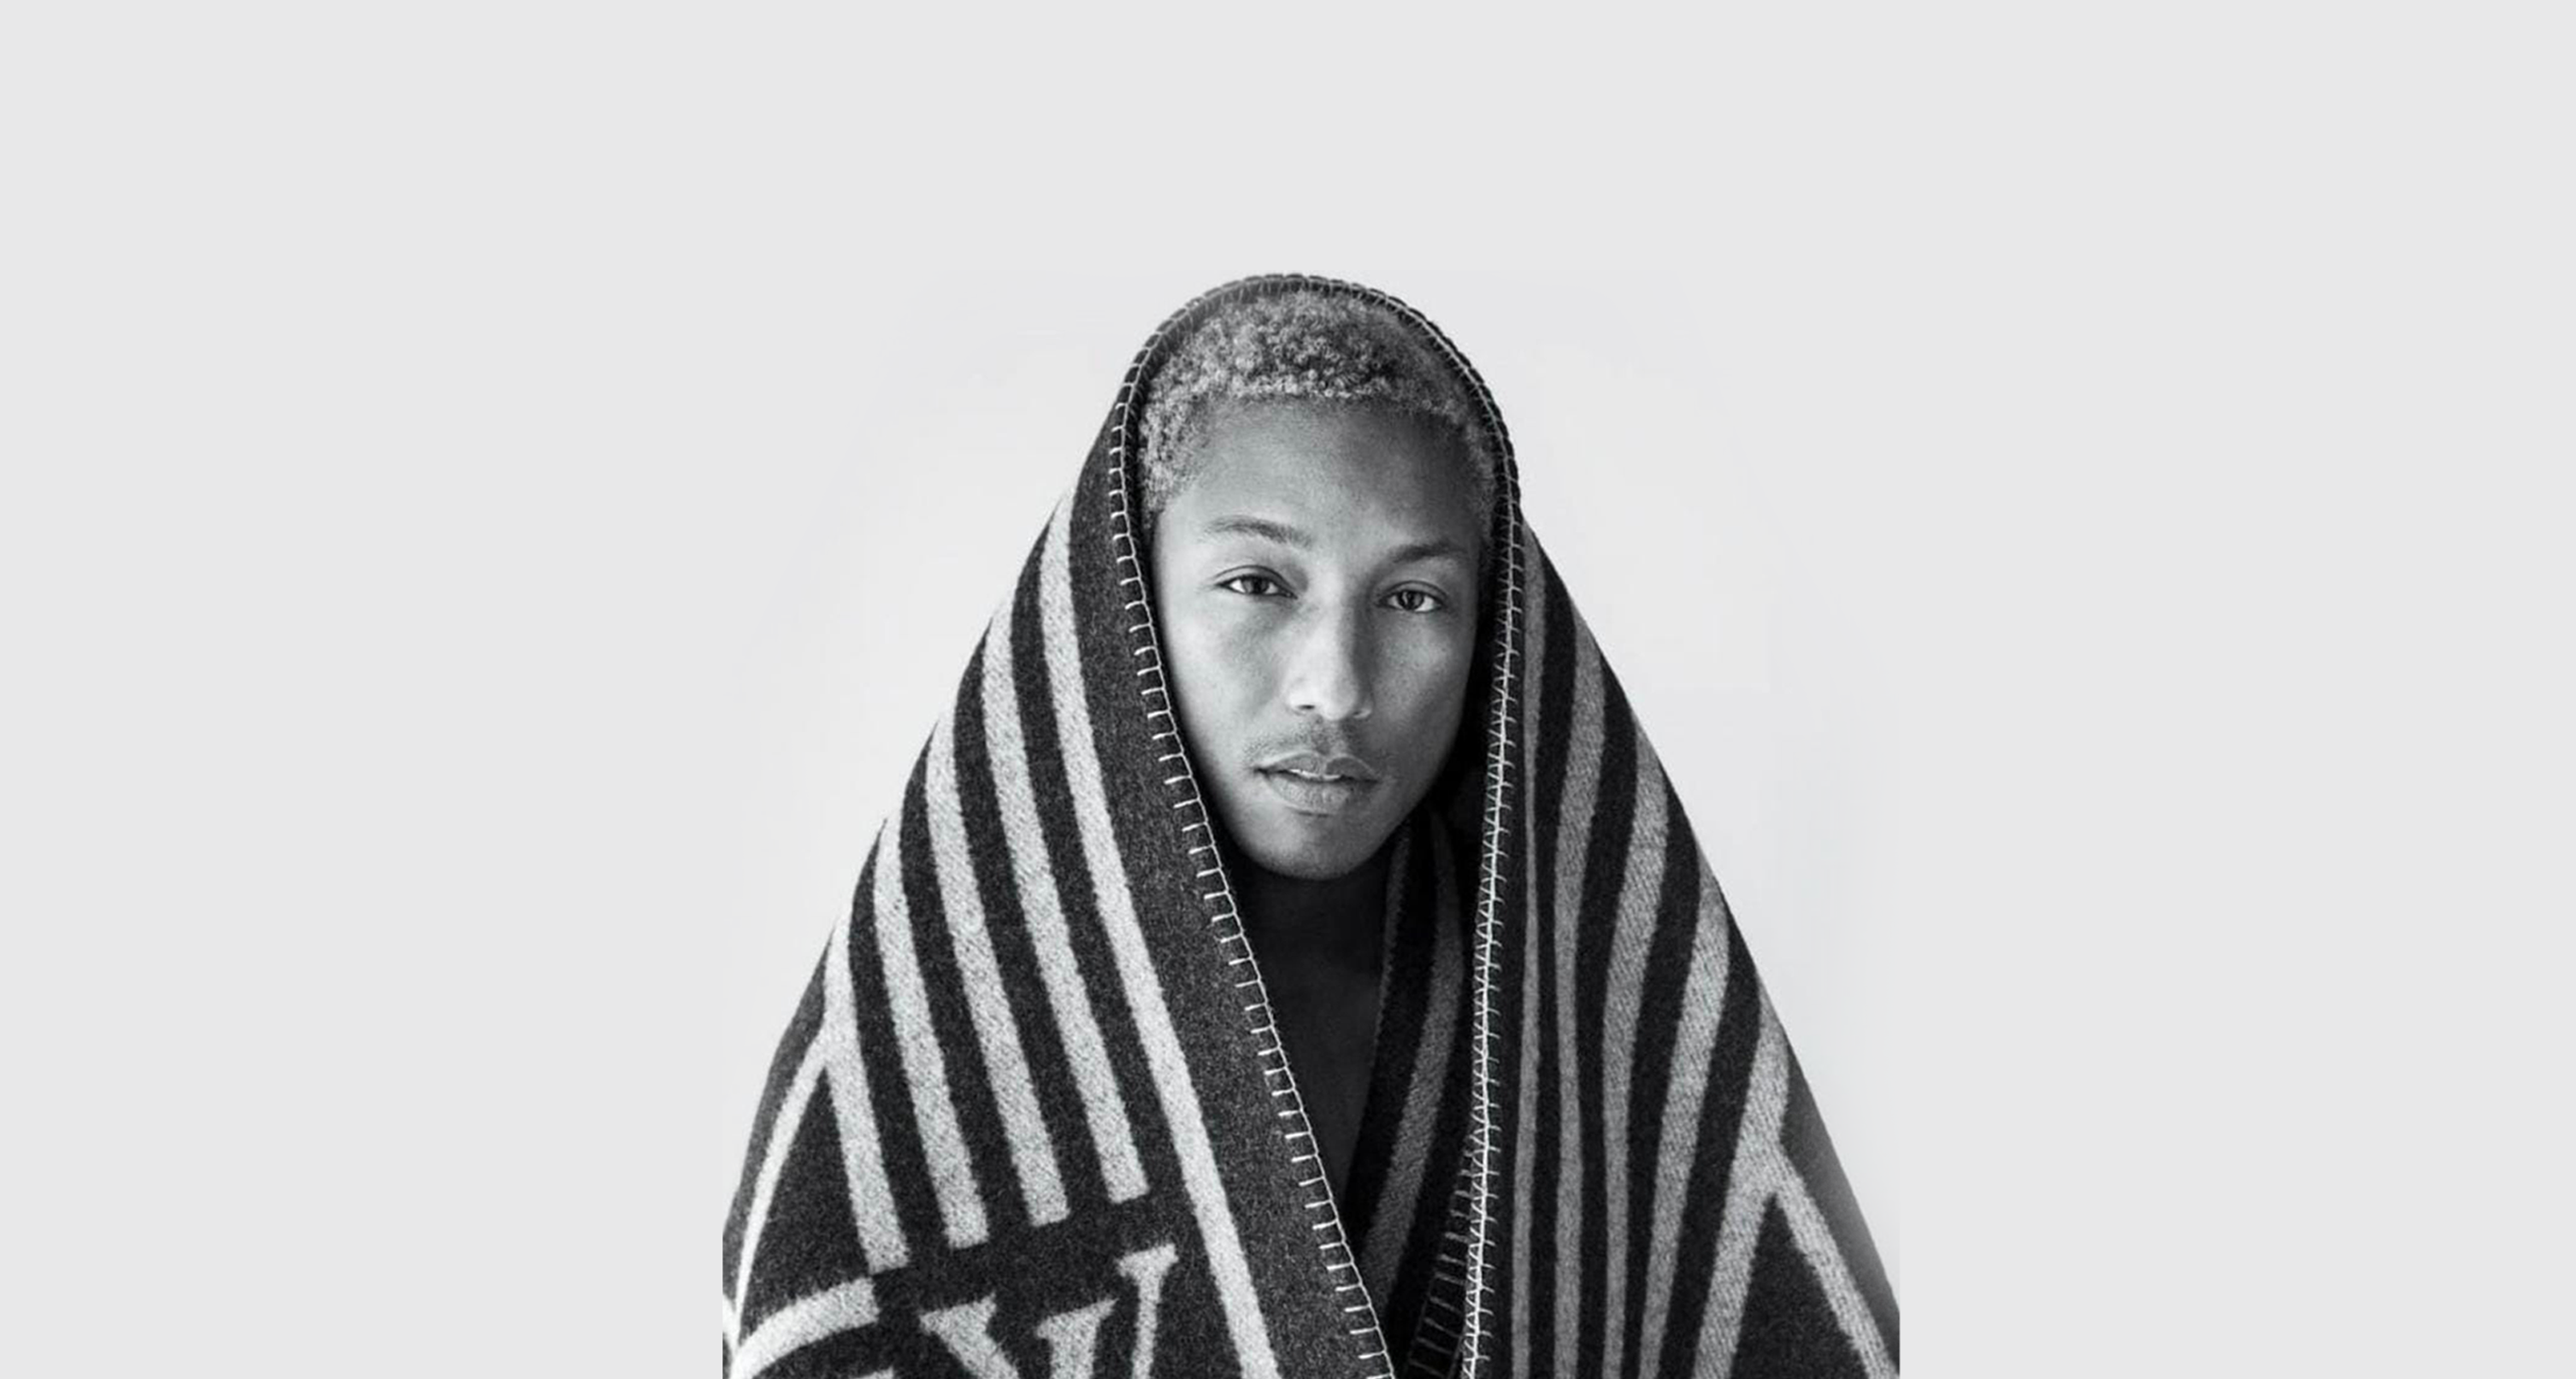 Virgil Abloh Reveals How Pharrell Williams Impacted His Work